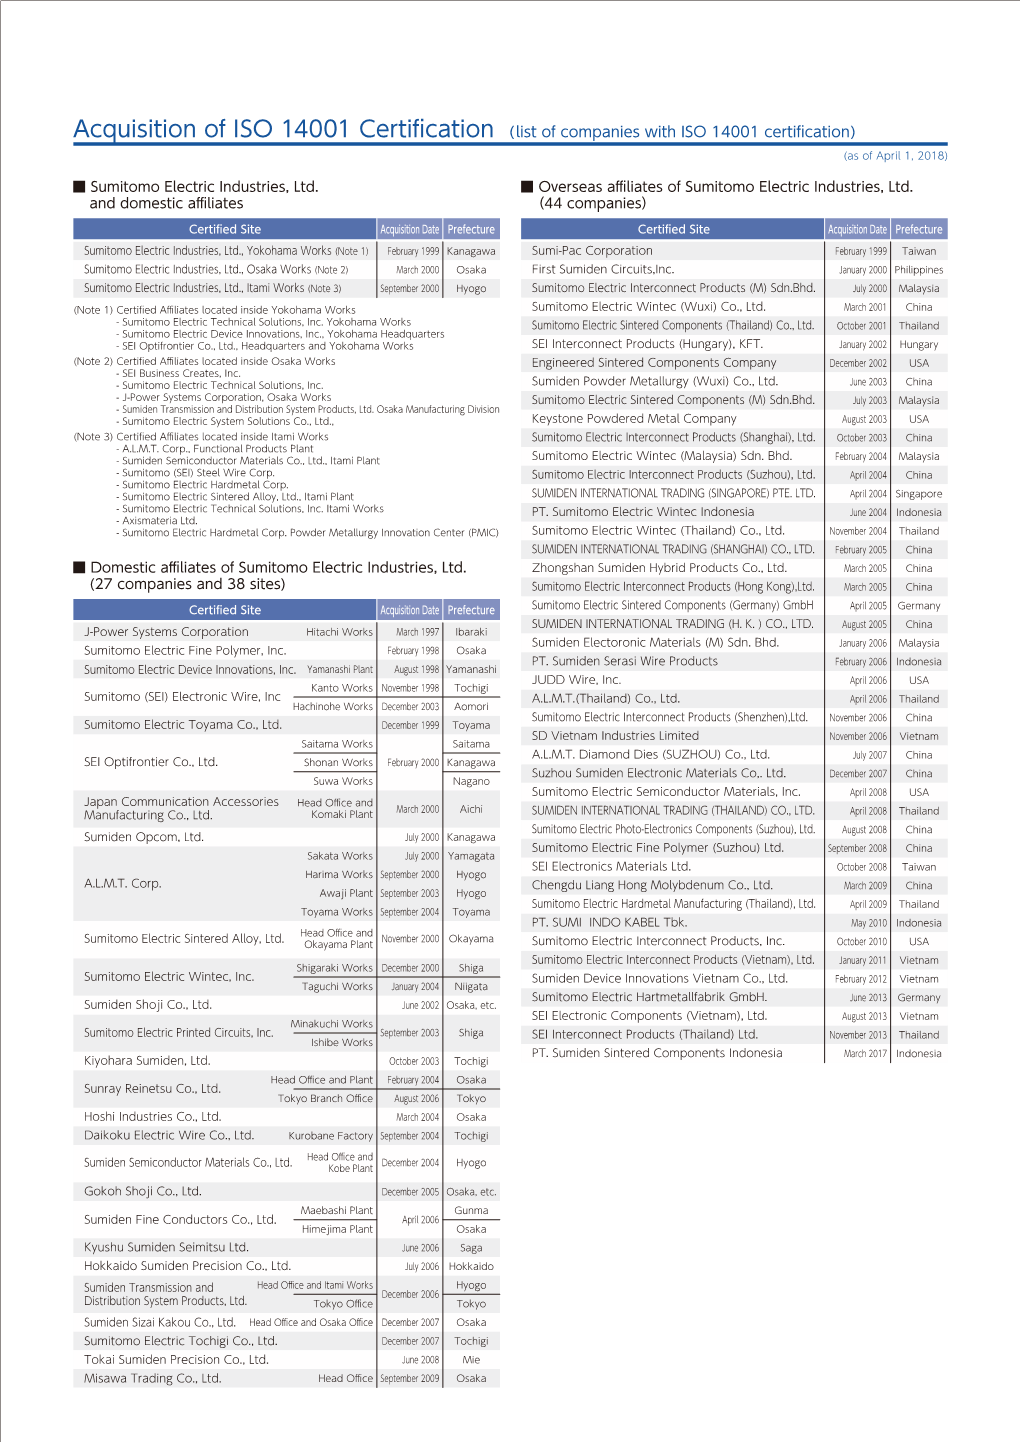 Domestic Affiliates of Sumitomo Electric Industries, Ltd. (27